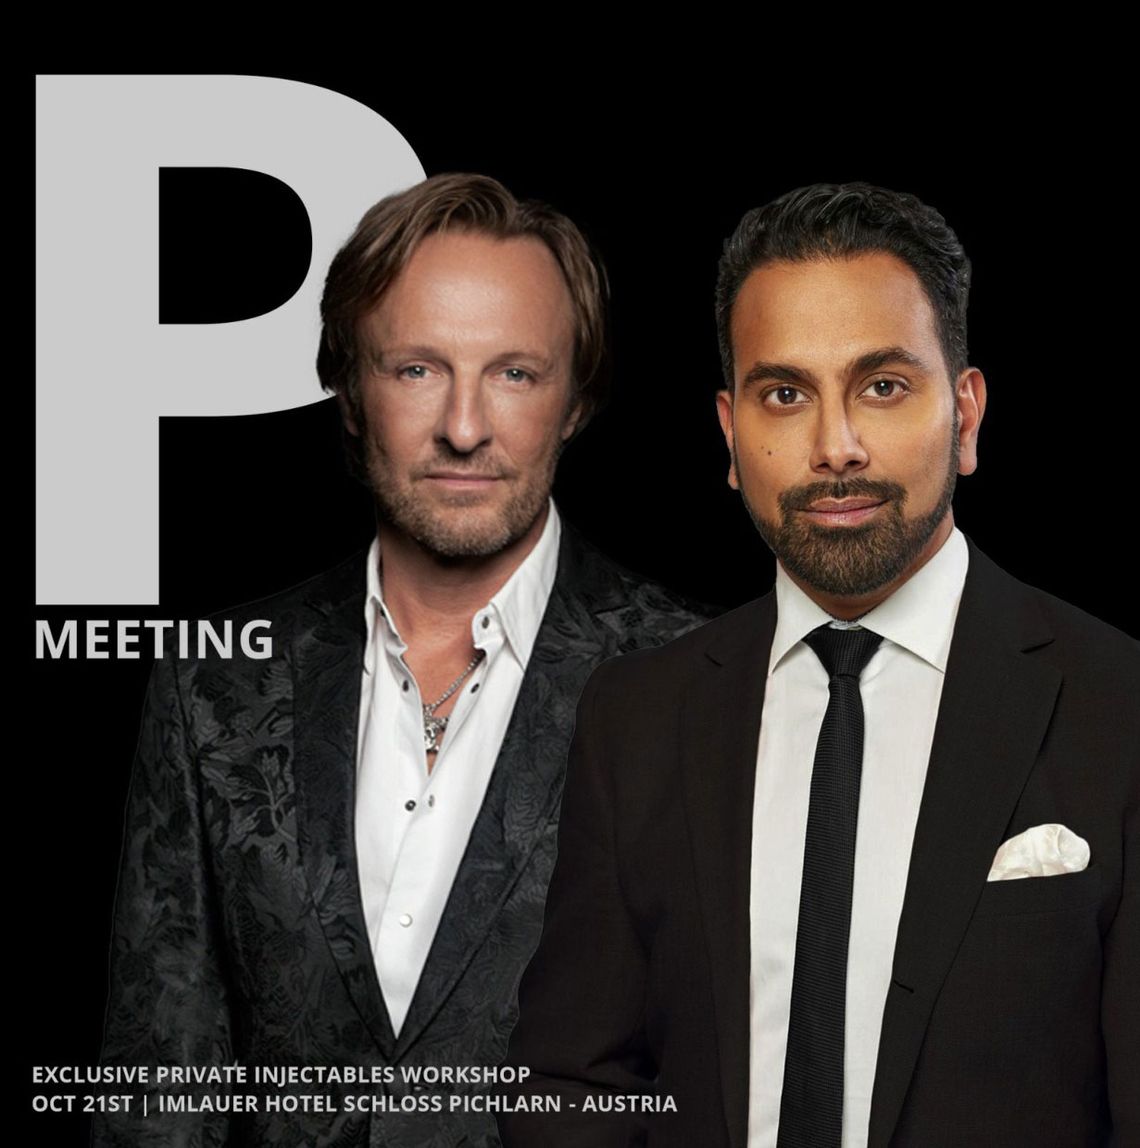 P Meeting